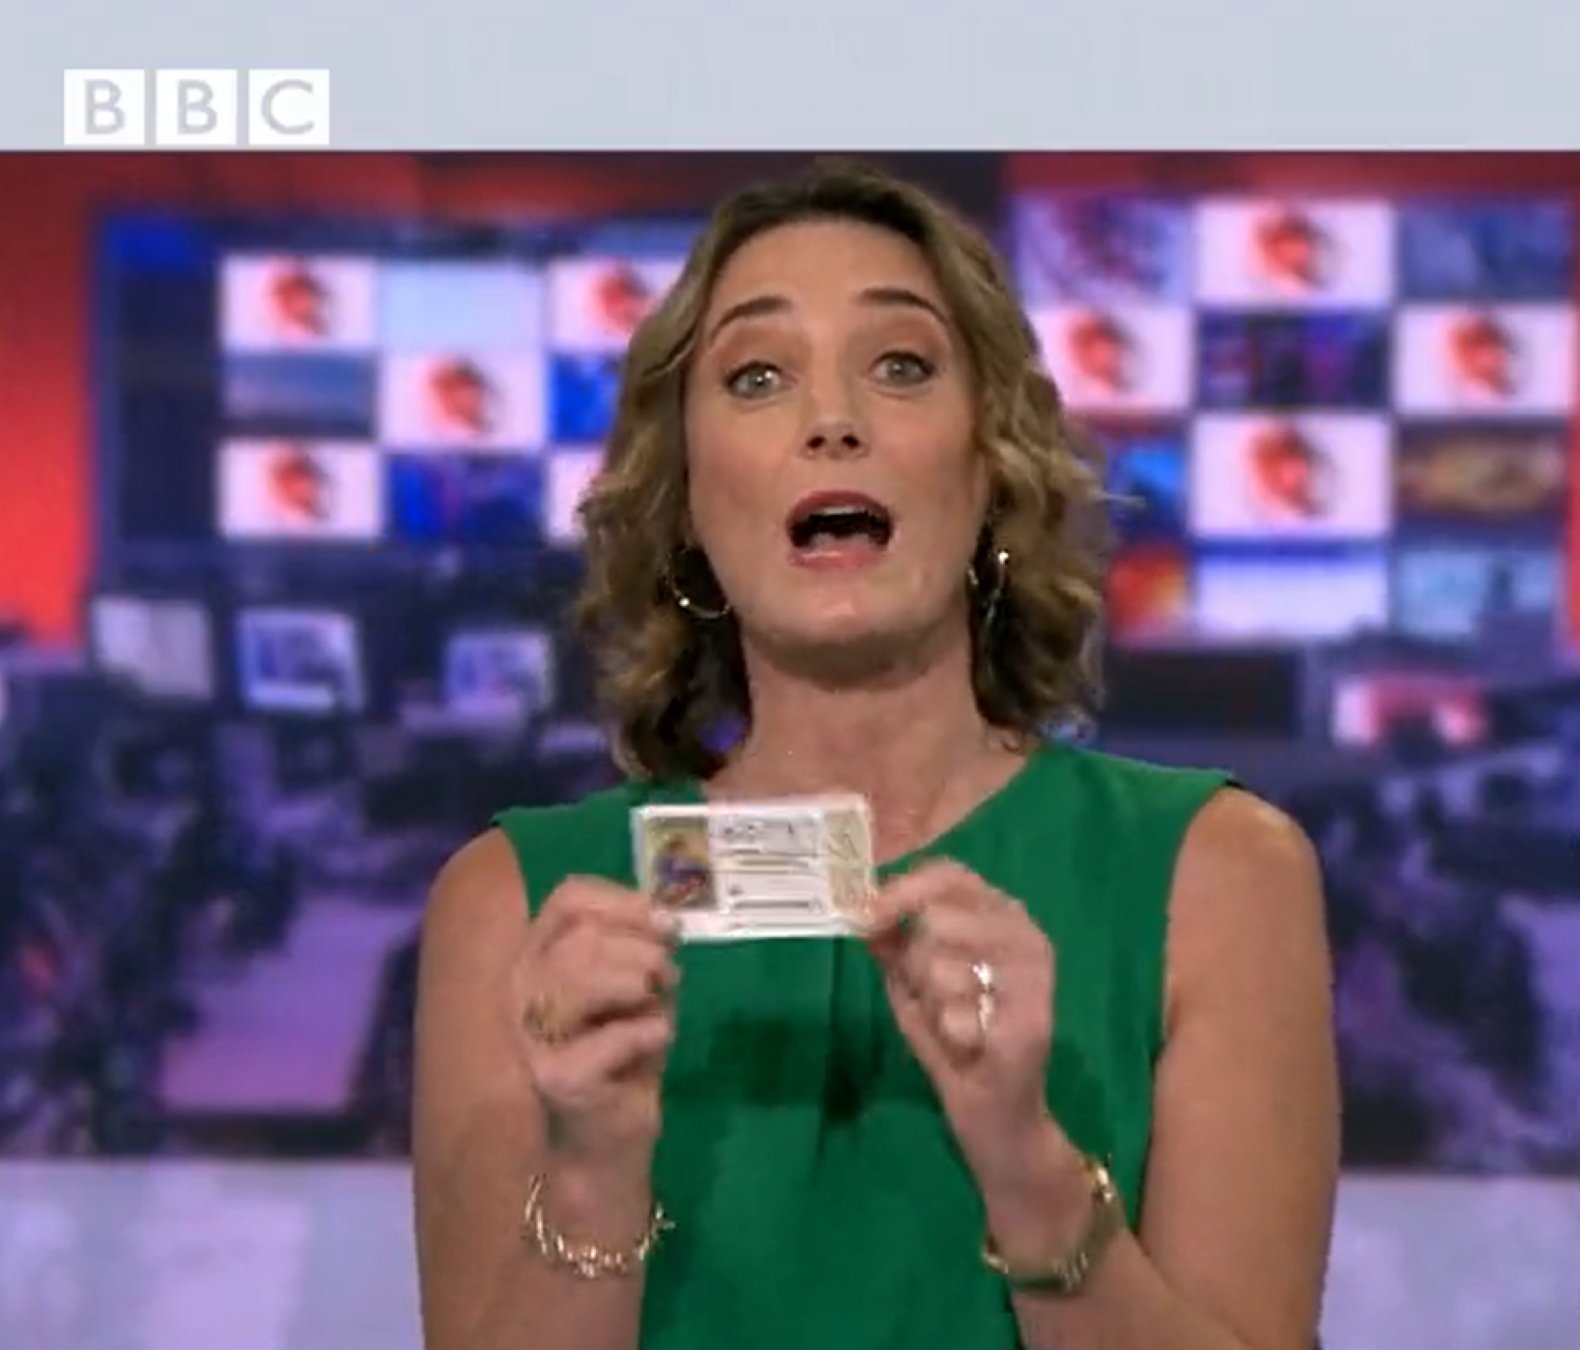 presentadora BBC loteria Twitter